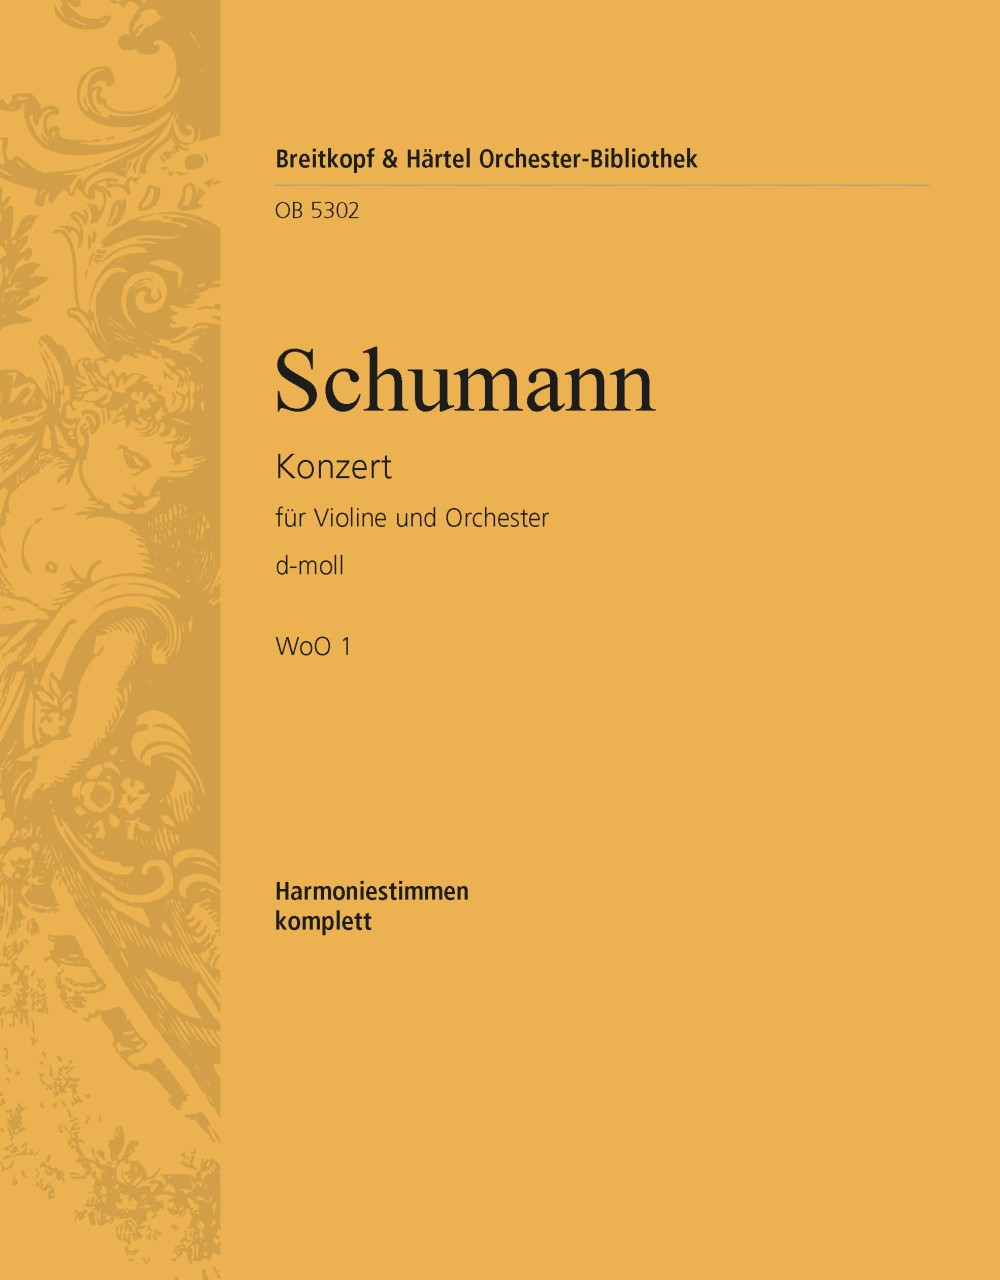 Schumann: Violin in Minor, 1 - Ficks